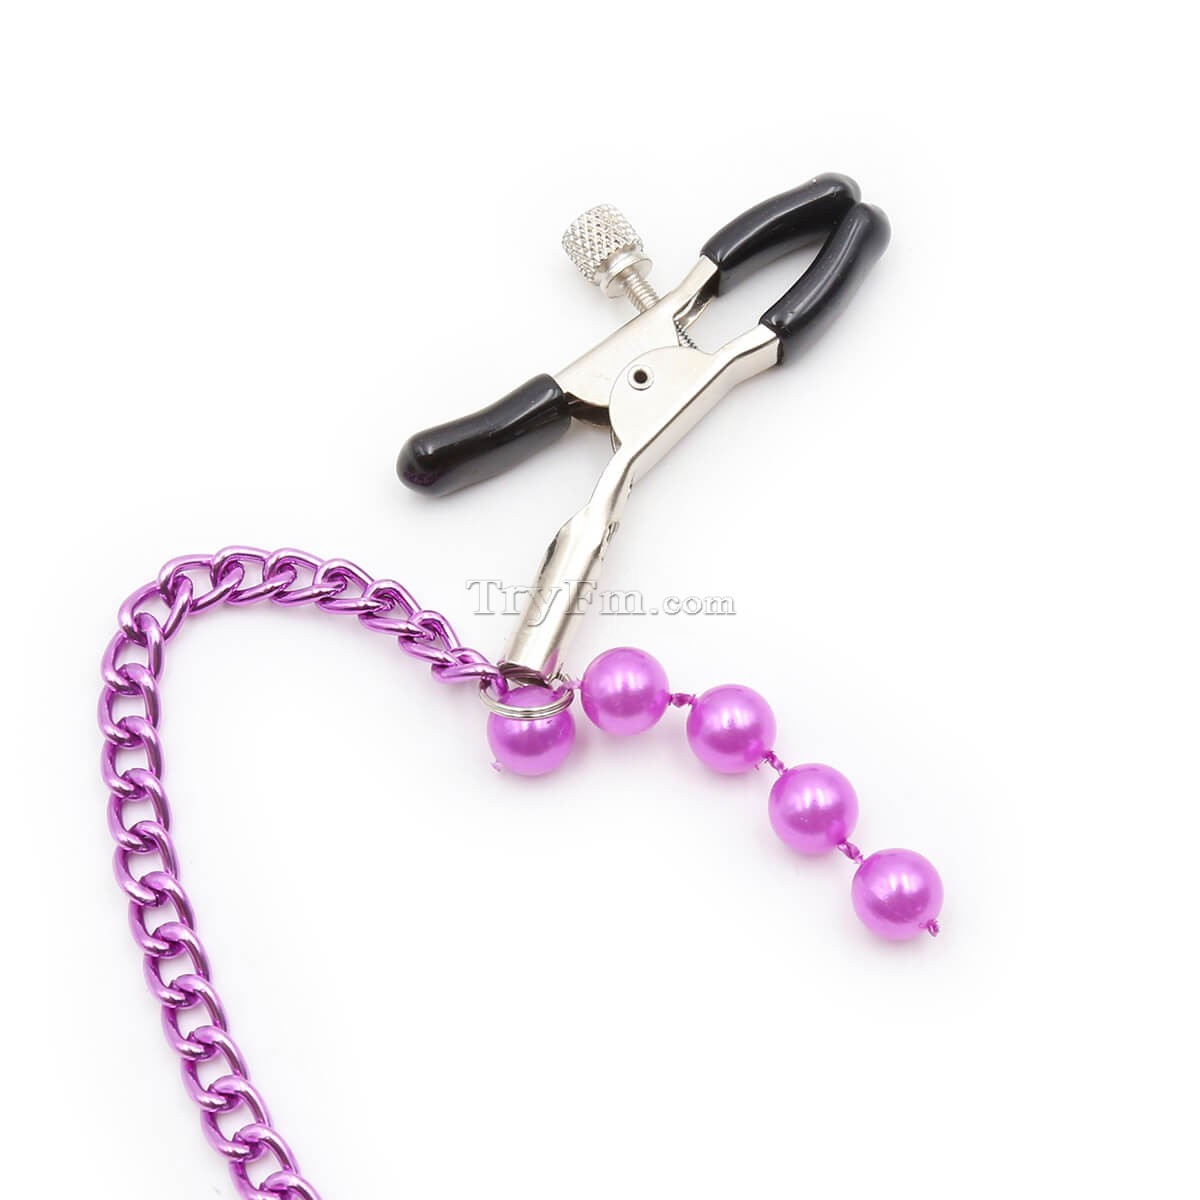 2-purple-chain-nipple-clamp3.jpg